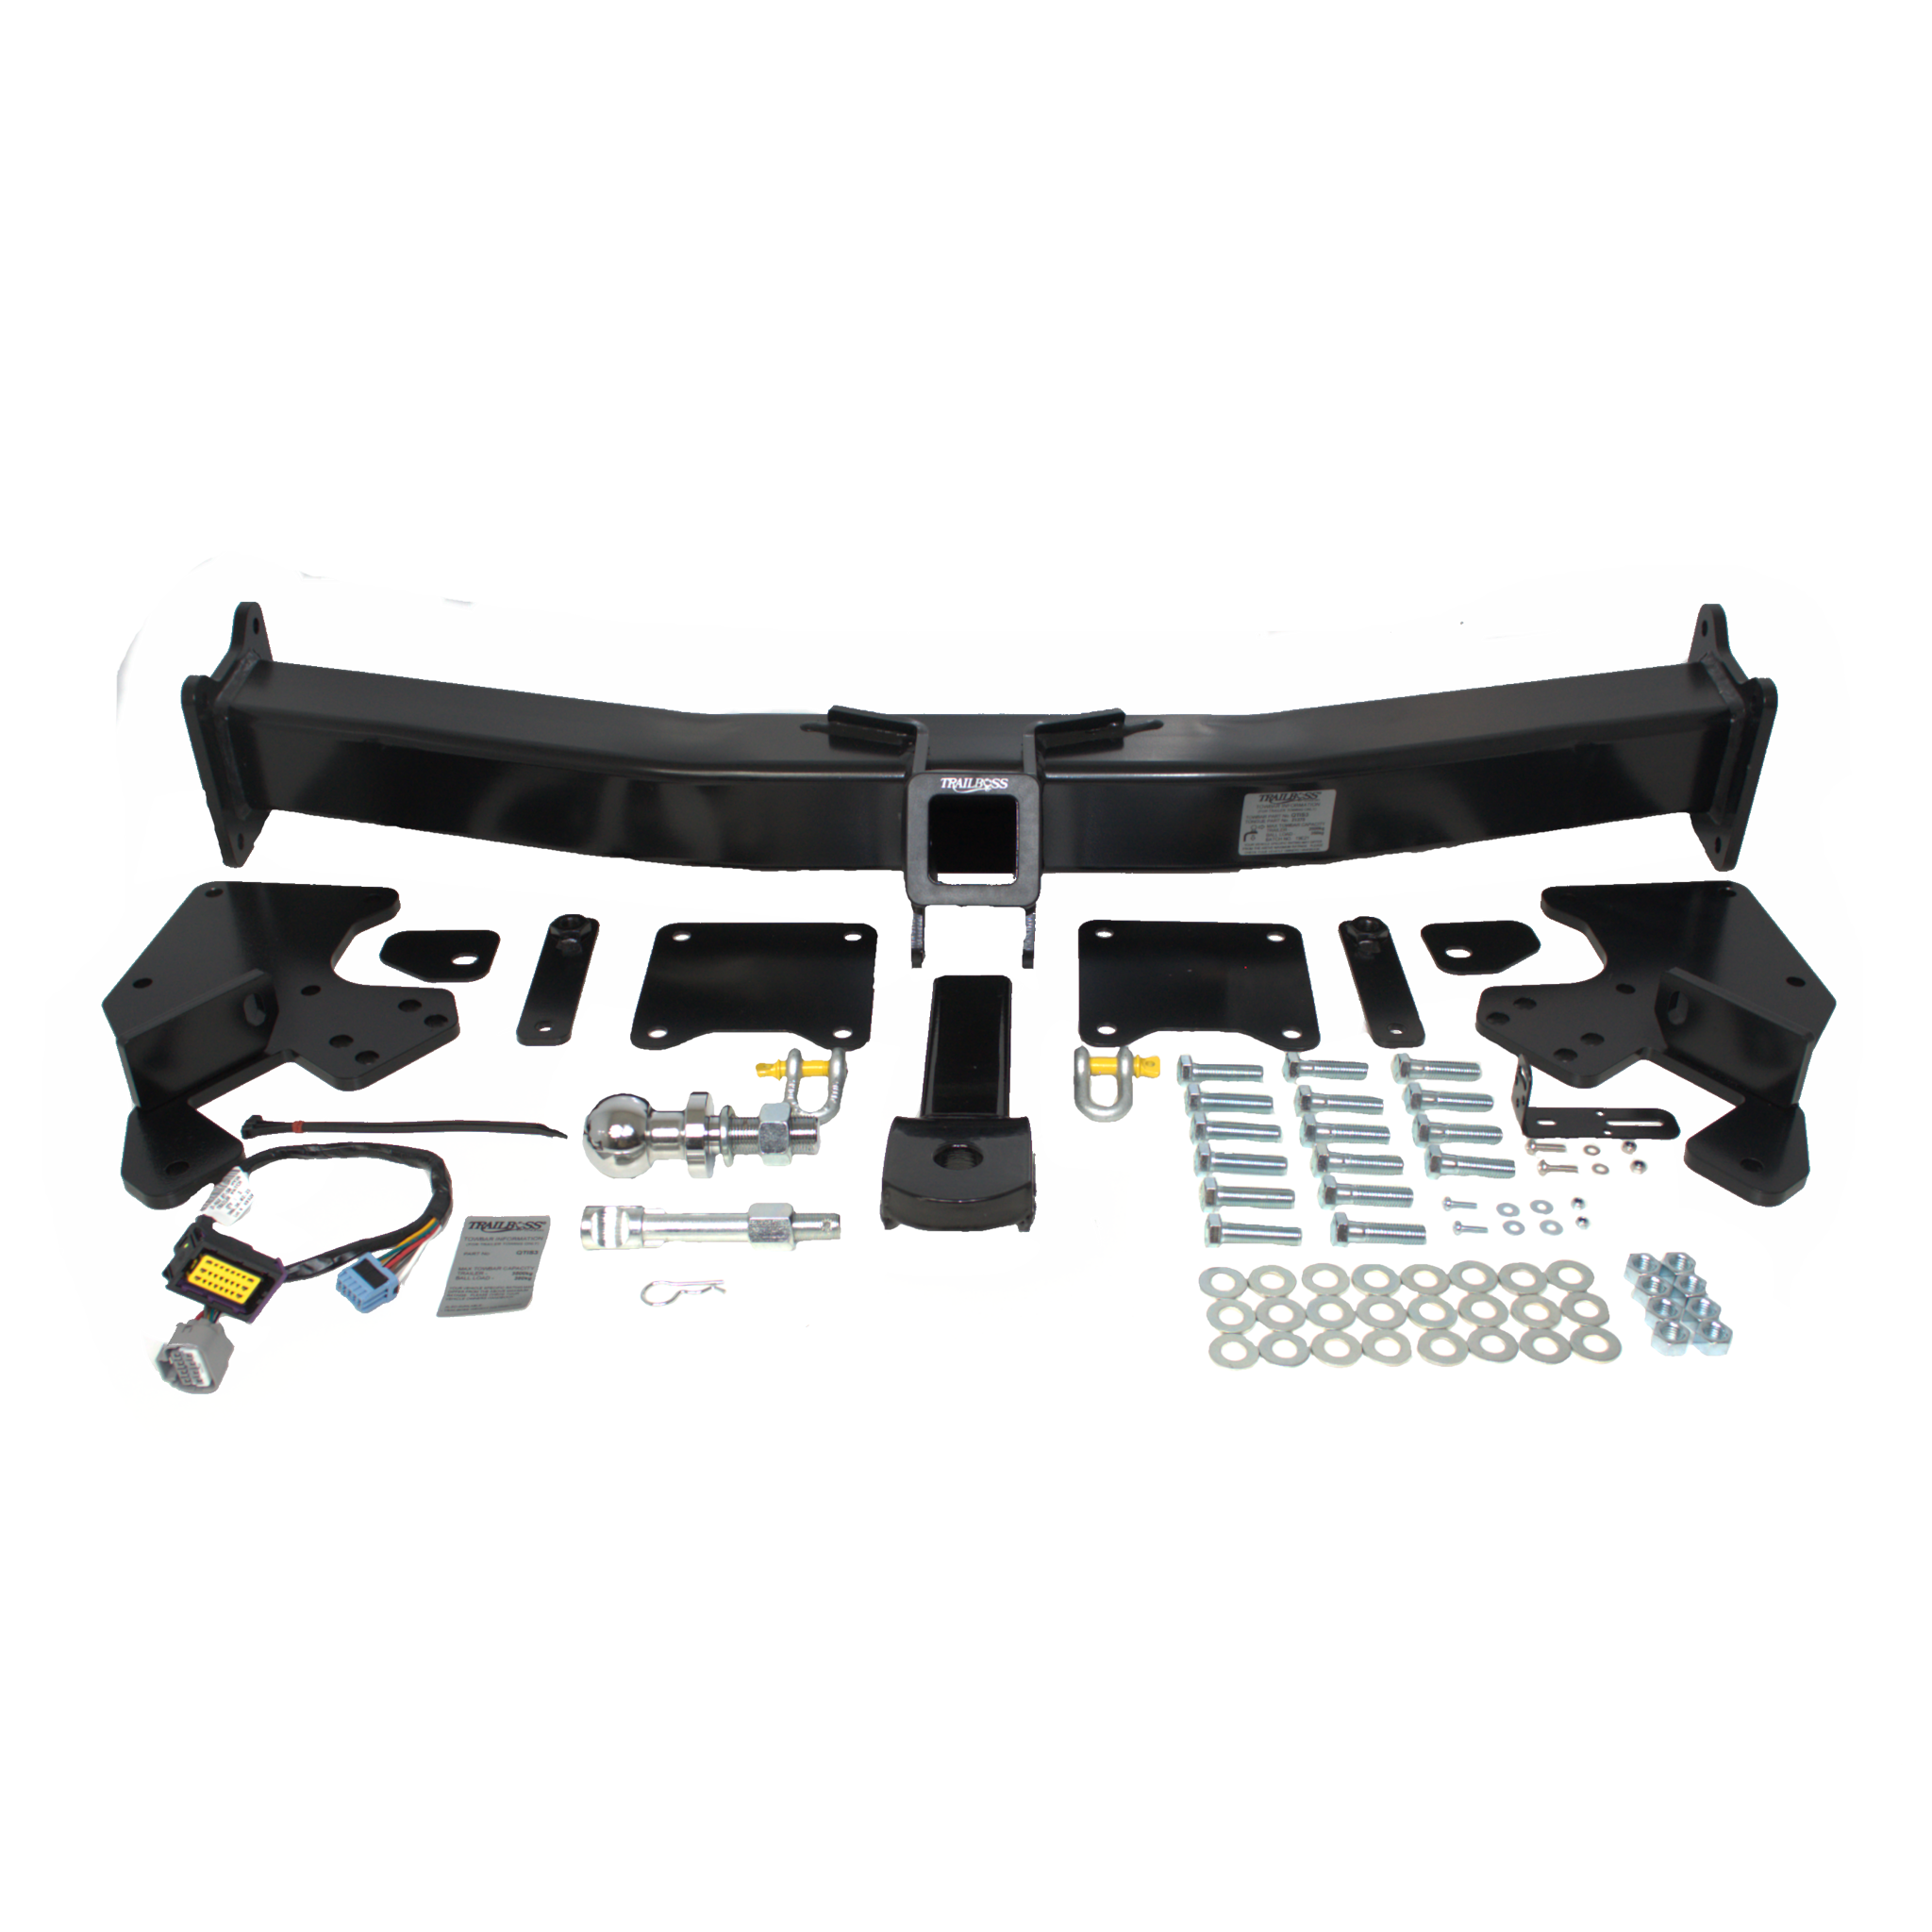 Isuzu D-Max Tub Body 08/2020 - 09/2021 (Inc Harness with Reverse sensor cut out) - Towbar Kit - HEAVY DUTY PREMIUM